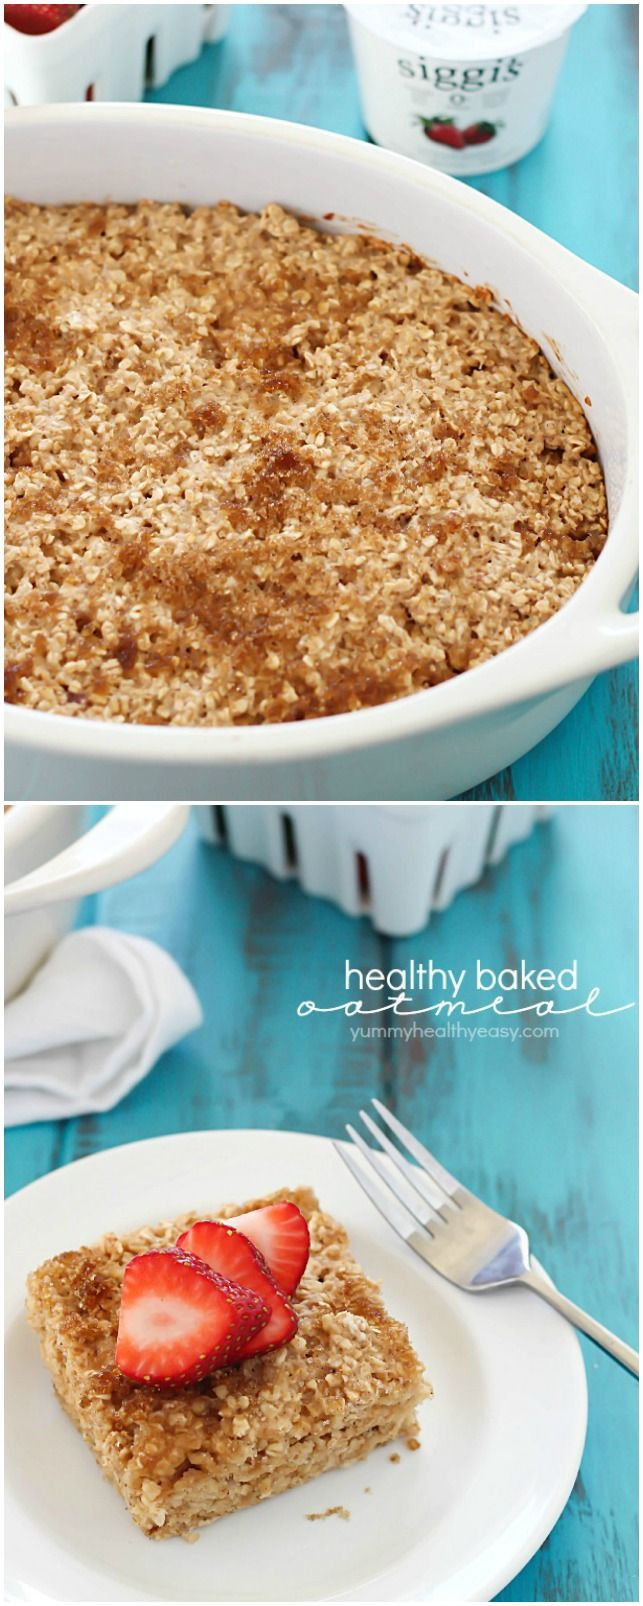 Healthy Oatmeal Ideas For Breakfast
 1000 ideas about Healthy Baked Oatmeal on Pinterest